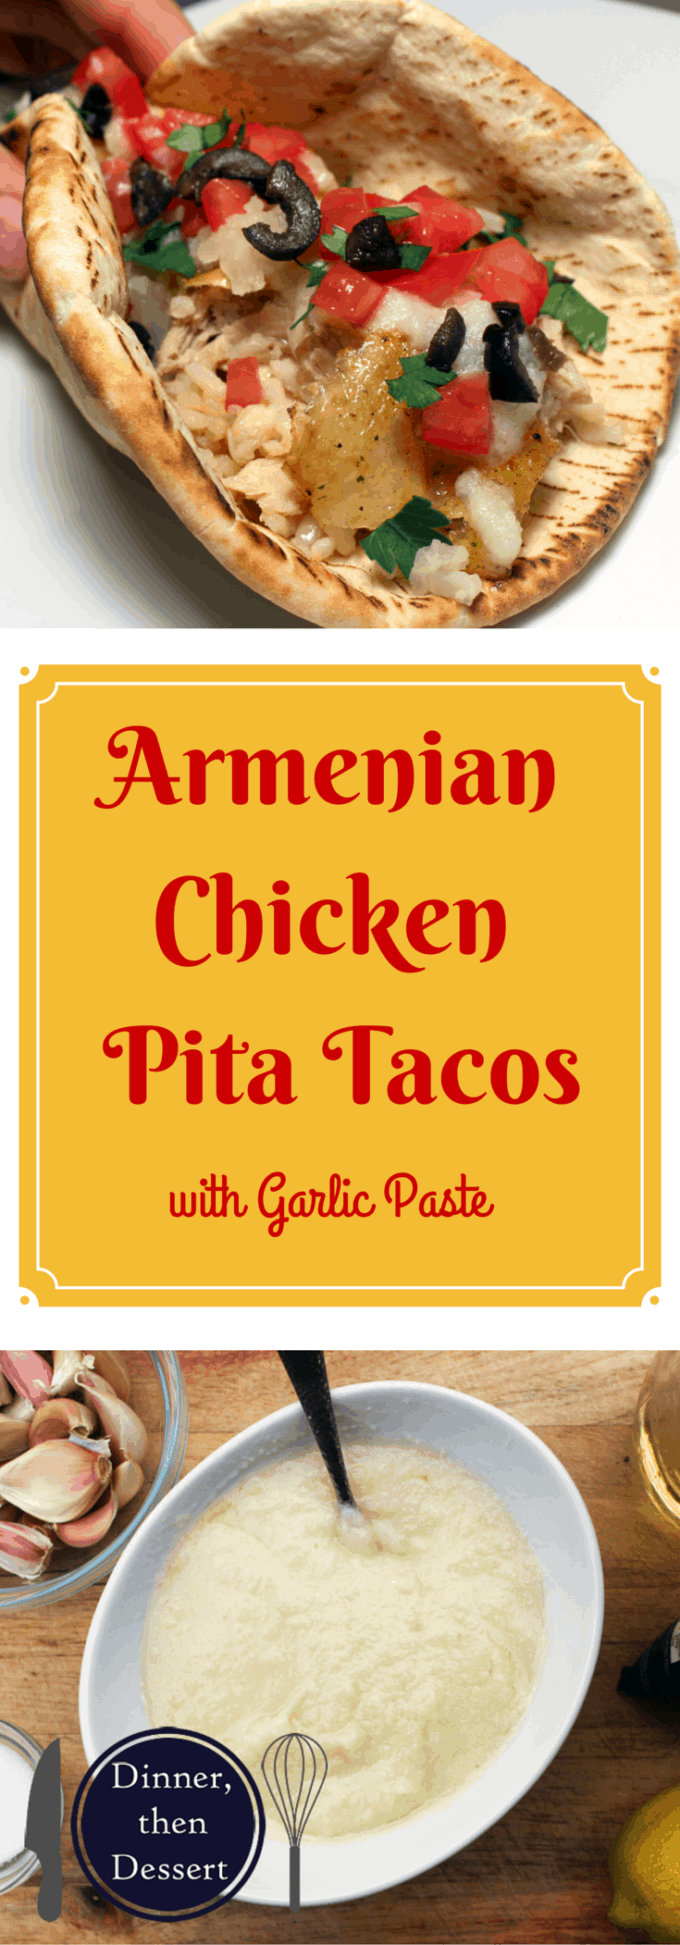 Armenian Garlic Rotisserie Chicken Pita Tacos are delicious crispy chicken in pita bread with garlic paste, lettuce, tomato and pickled veggies. Like a homemade gyro!